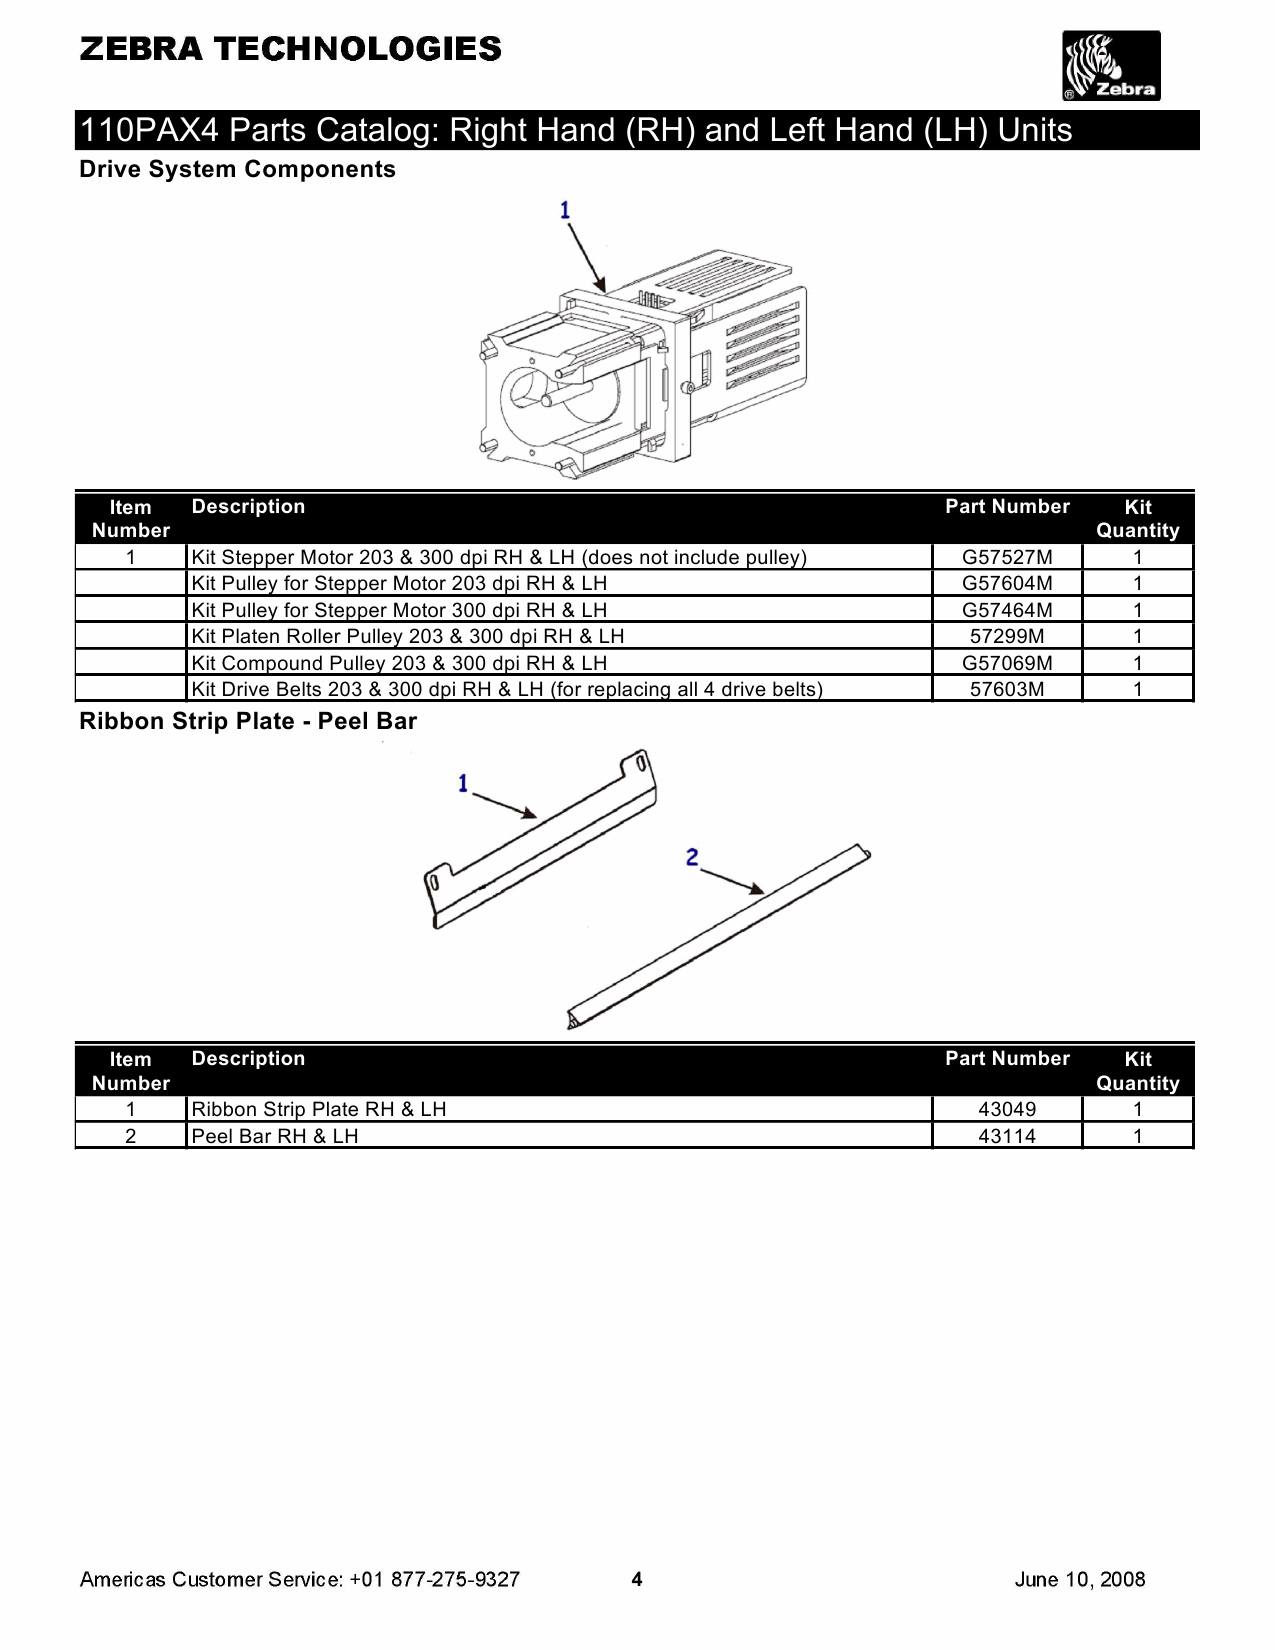 Zebra Label 110PAX4 Parts Catalog-4